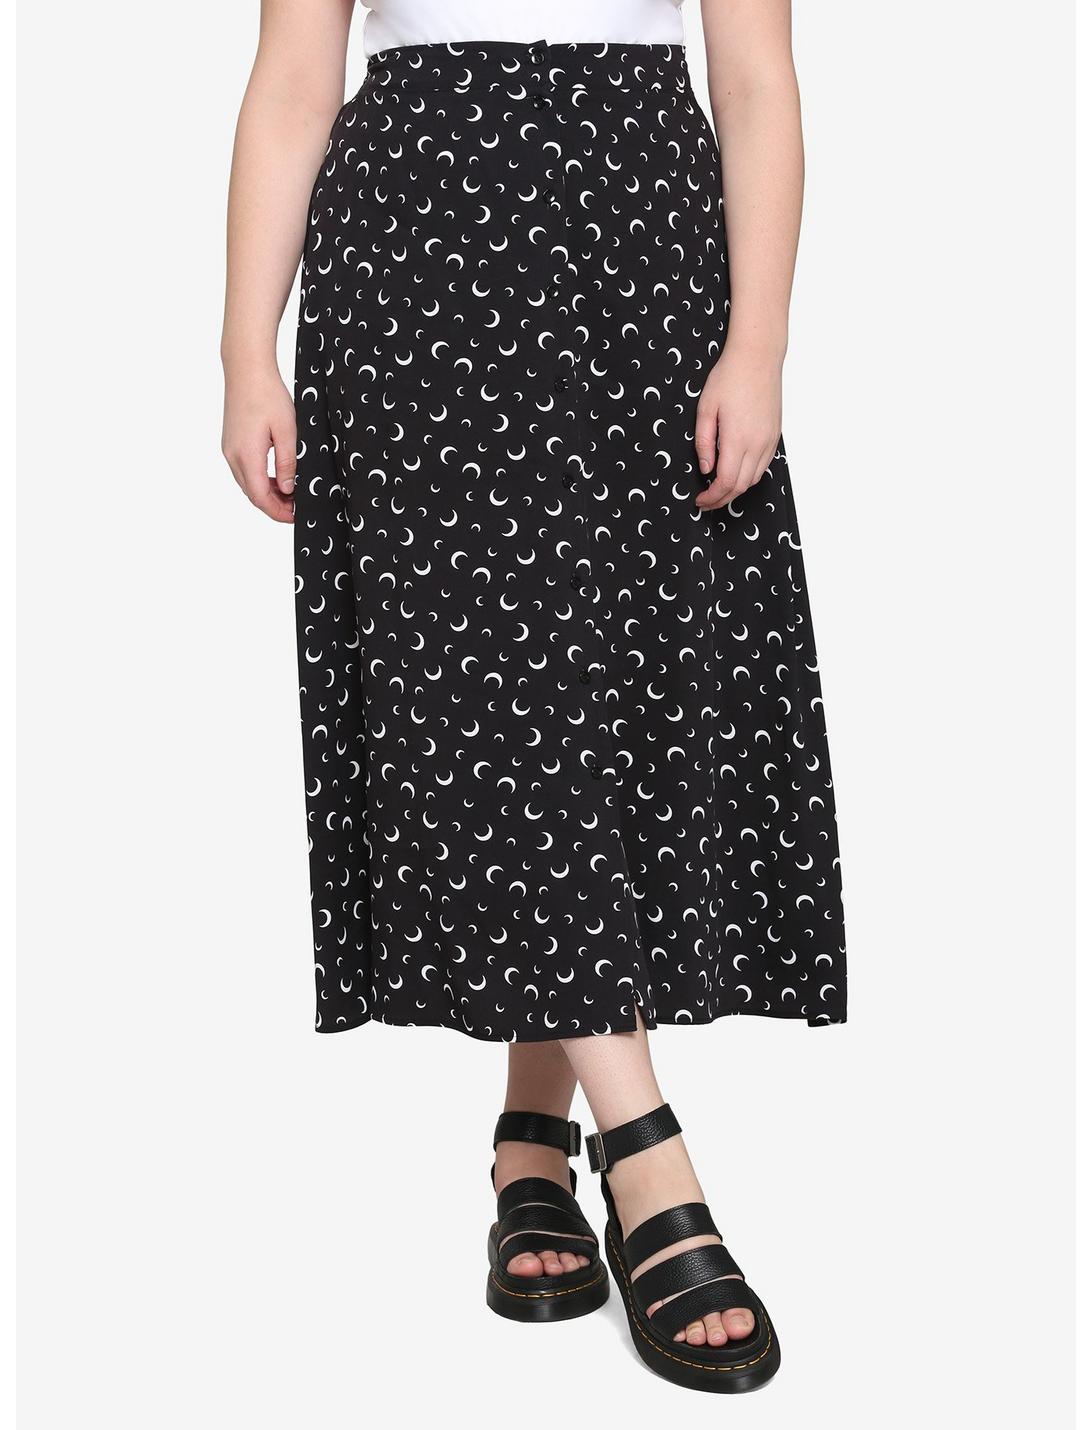 Crescent Moon Midi Skirt Plus Size, BLACK, hi-res